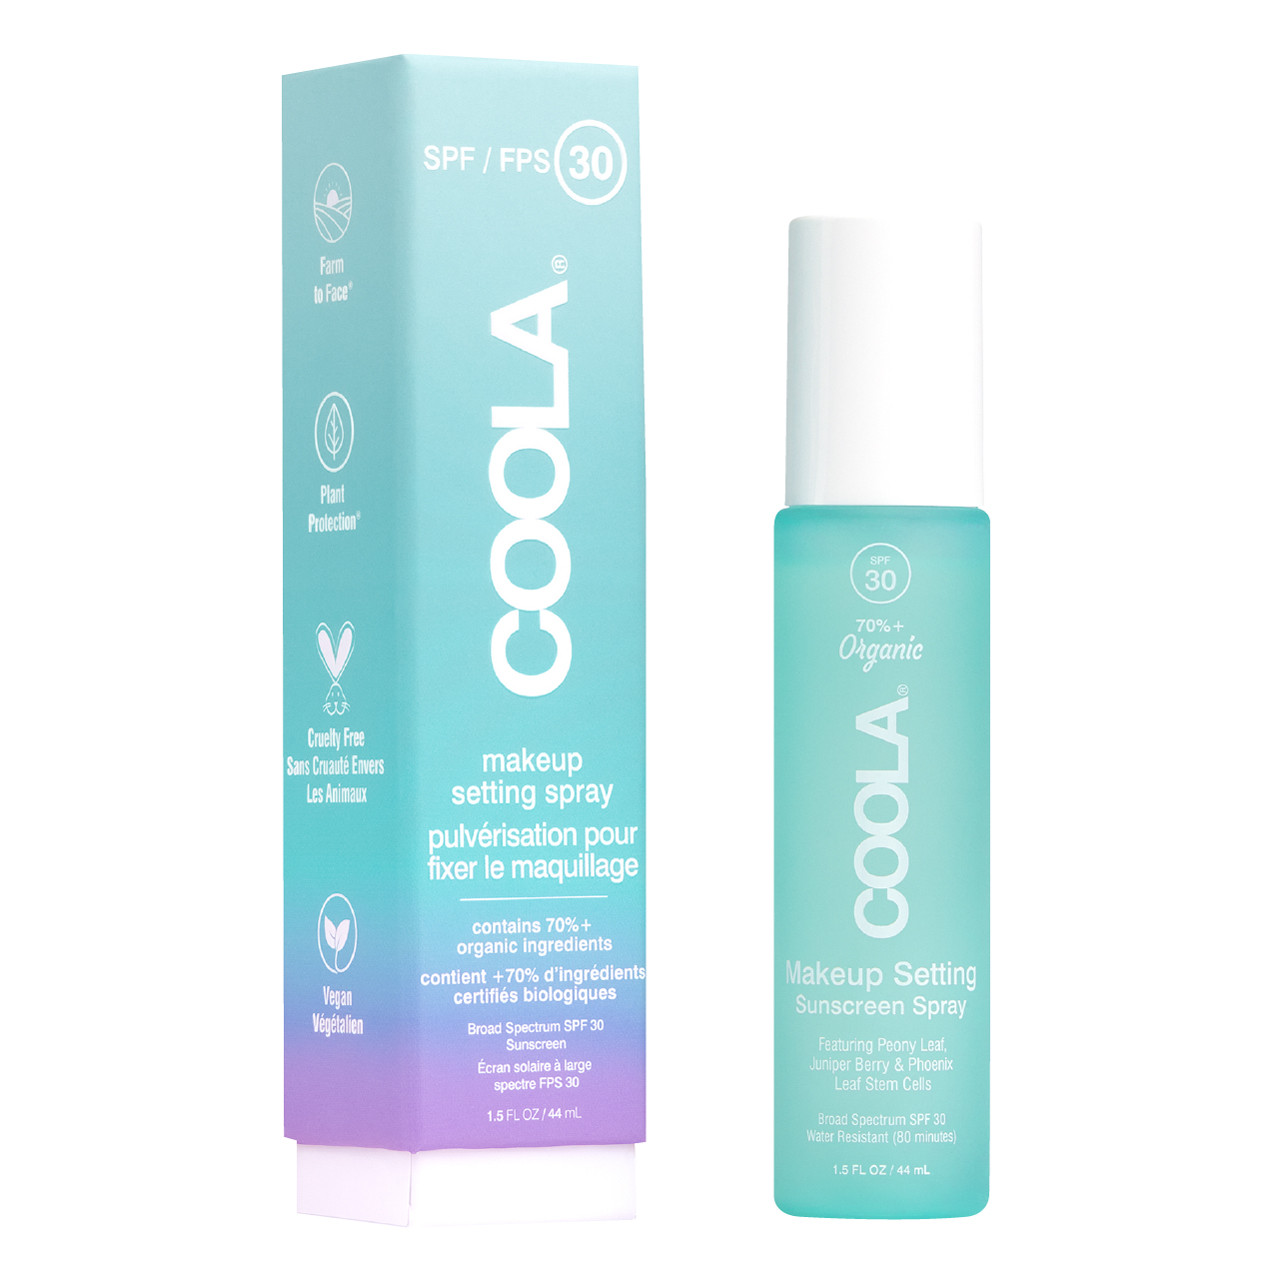 Coola Makeup Setting Sunscreen Spray 30, 44ml - VictoriaHealth